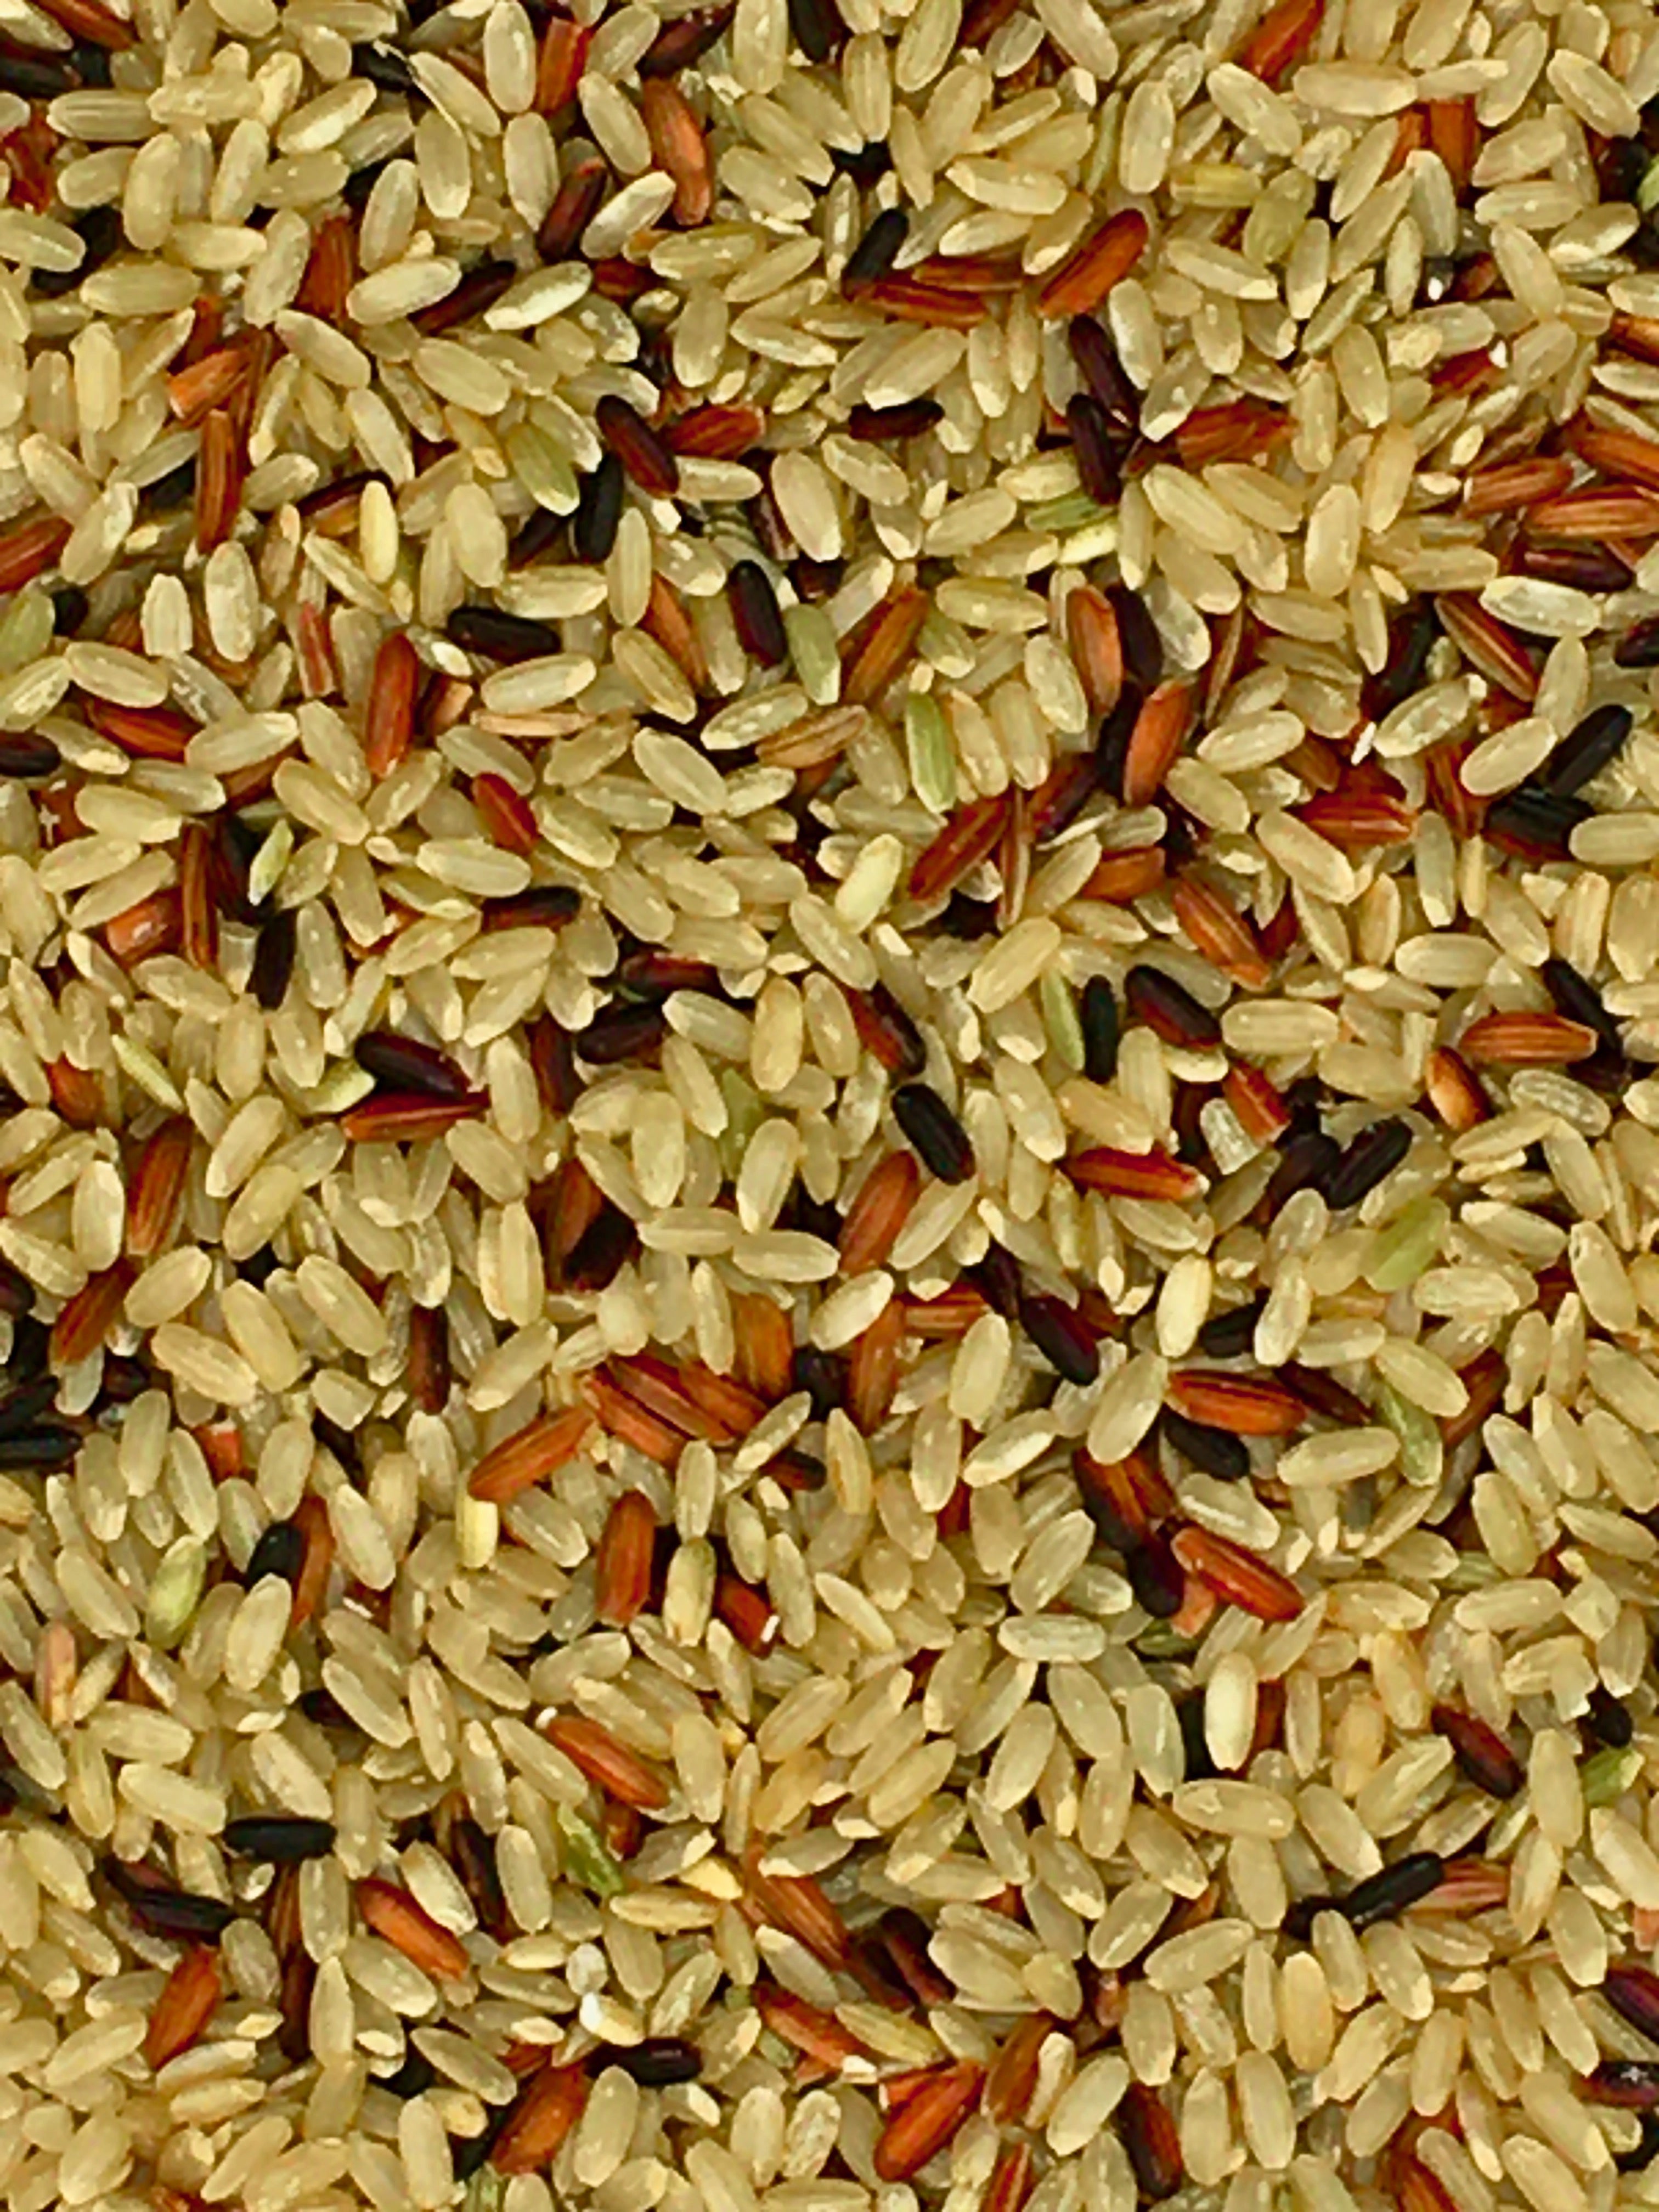  Baker Farms, Gourmet Louisiana Popcorn Rice, 2 lb